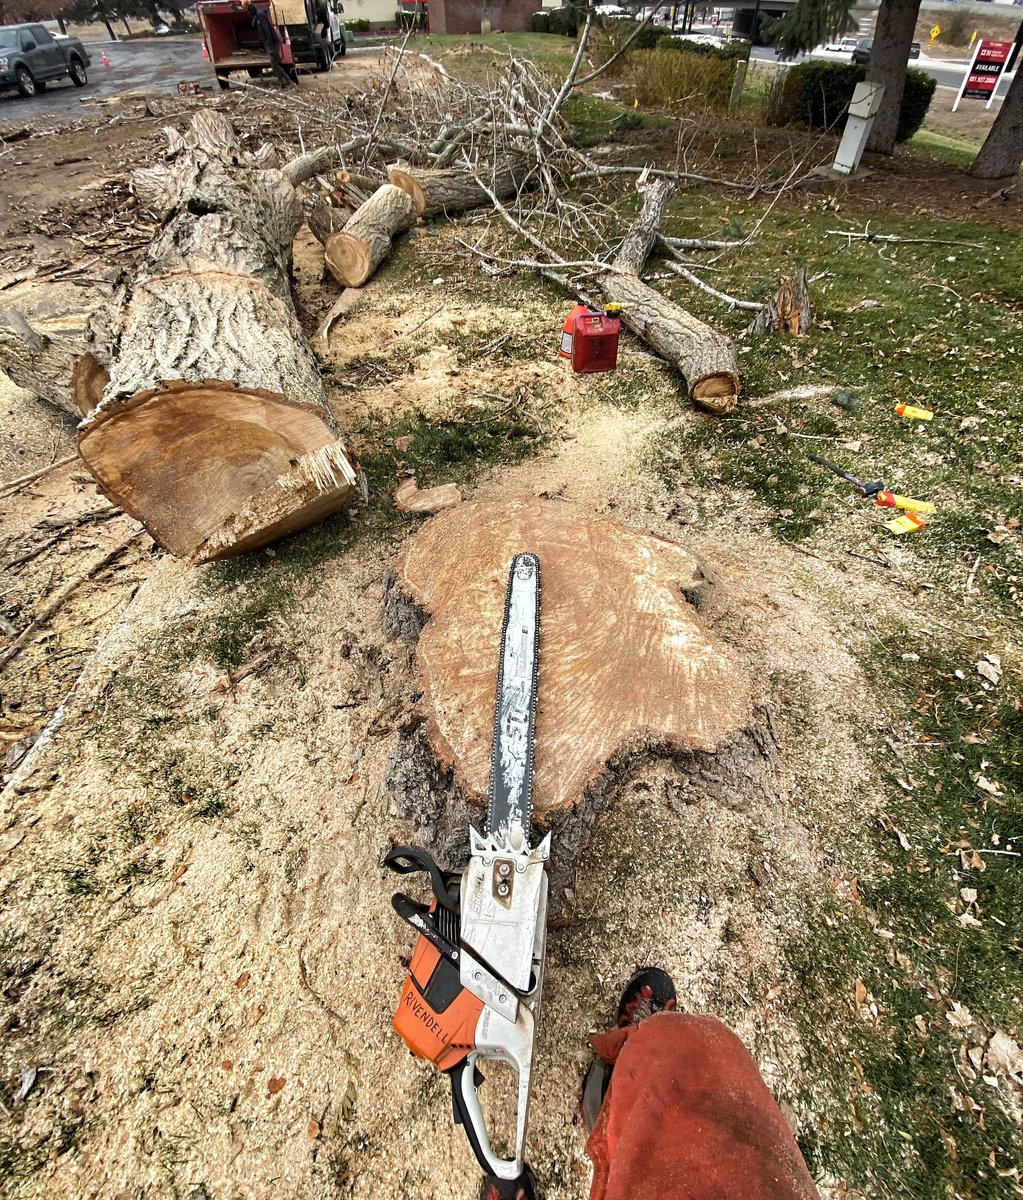 This Stihl 661 is looking a little short today!

#treecare #treework #treeremoval #treefelling #treebiz #treestuff #treelife #treepruning #trees #arborist  #arblife #arboriculture #utah #mountains #landscape #views #outdoors #nature #stihl #chainsaw #safety #work #rivendelltree